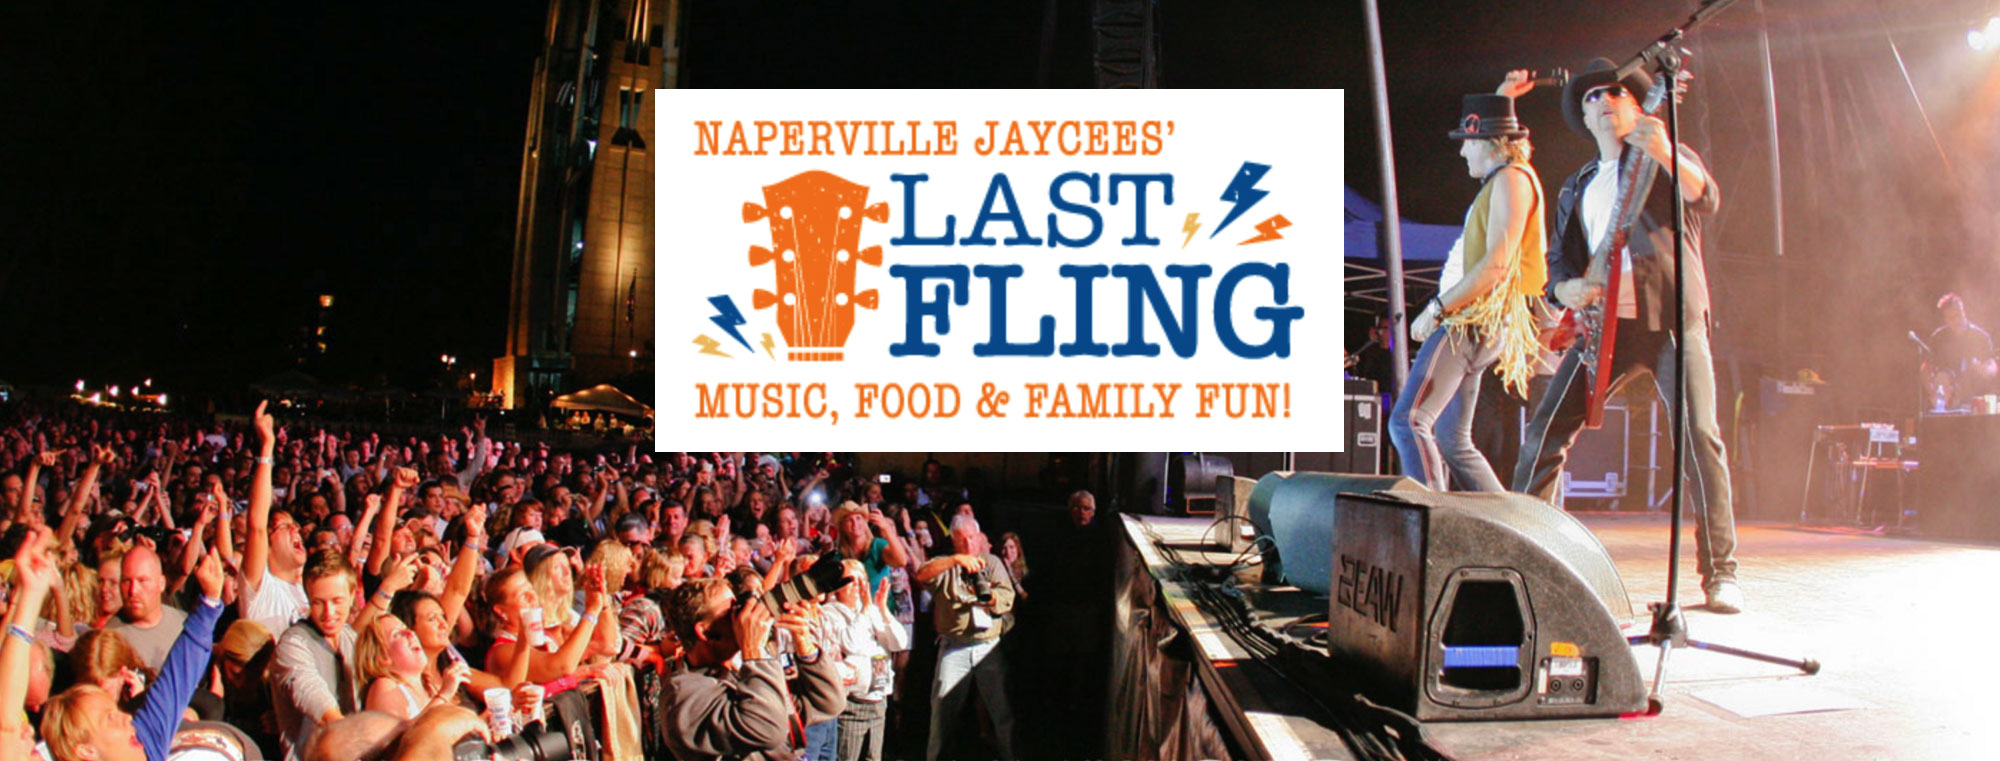 Naperville Jaycees' Last Fling @ Downtown Naperville